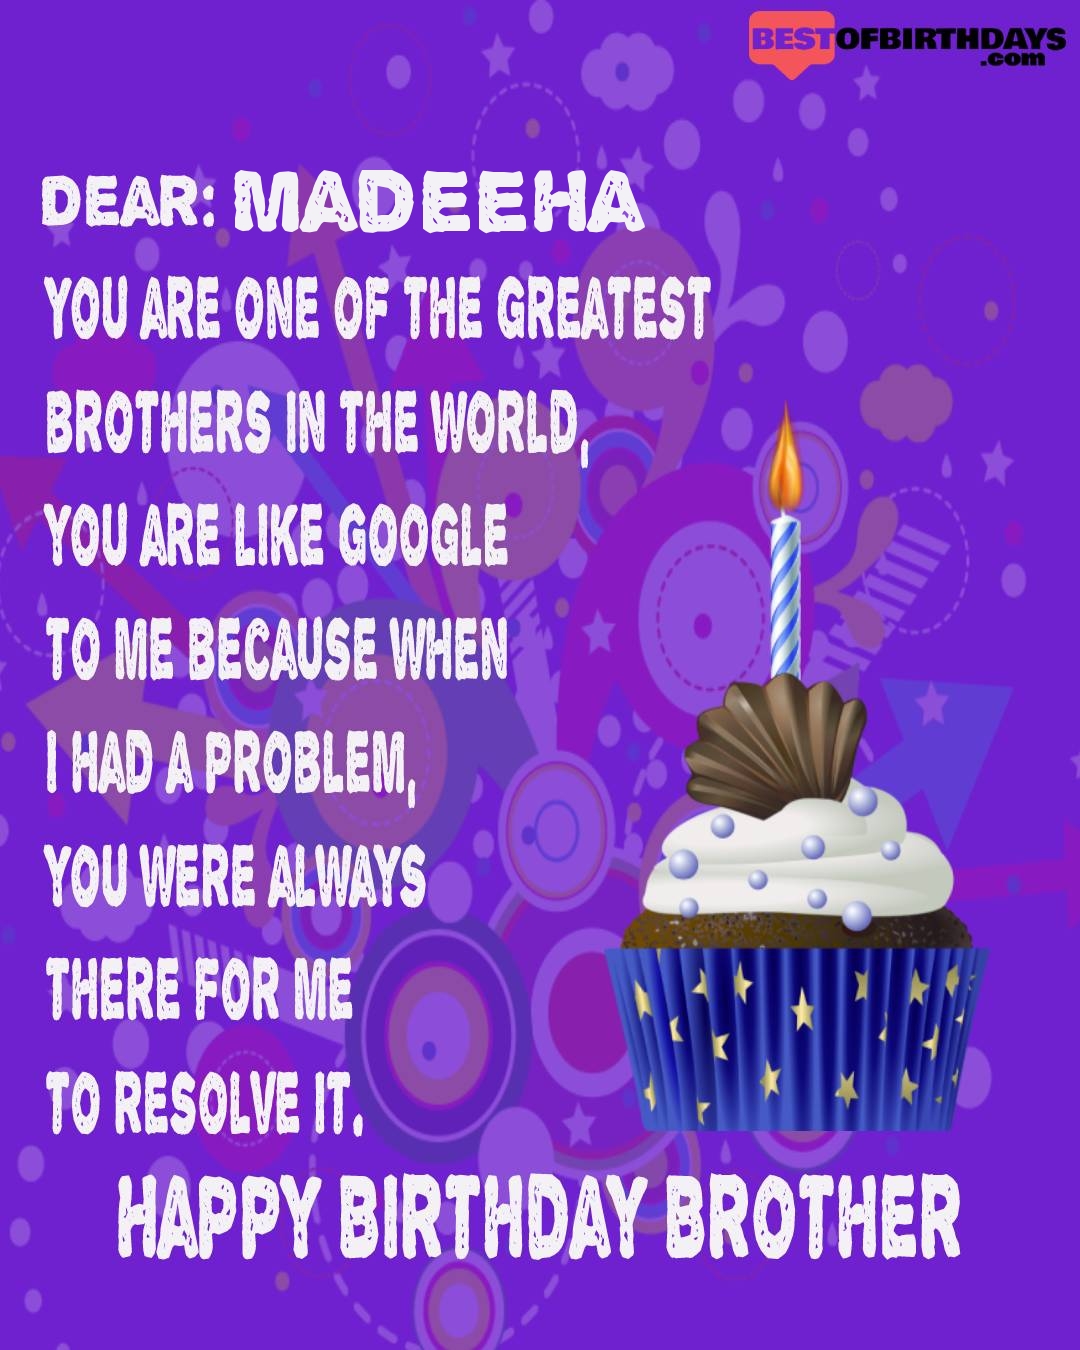 Happy birthday madeeha bhai brother bro